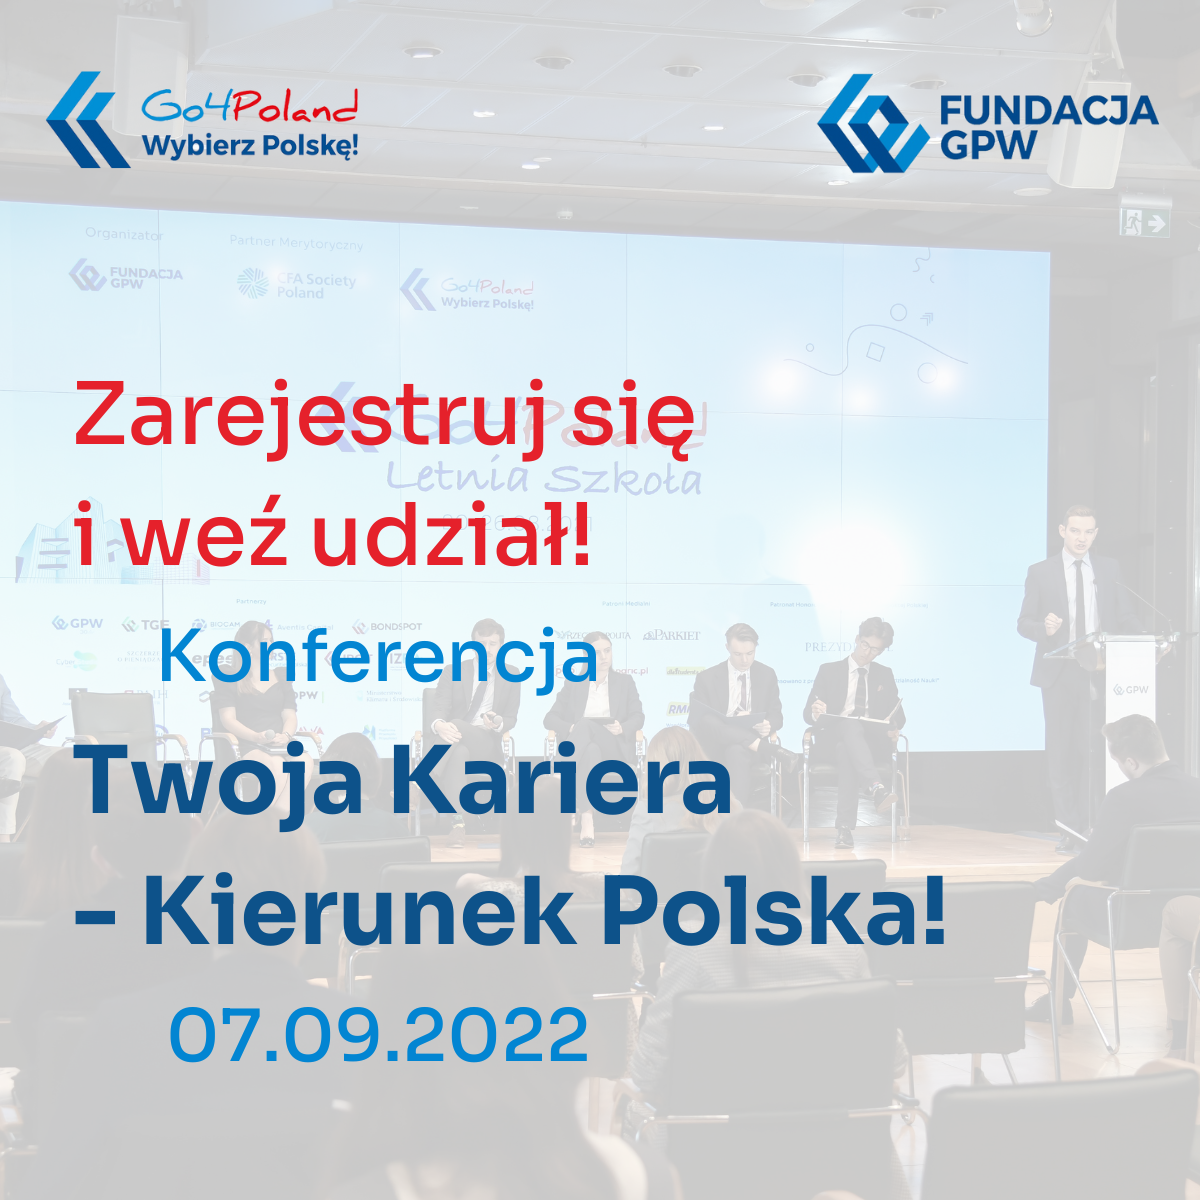 Konferencja "Twoja kariera - kierunek Polska!"